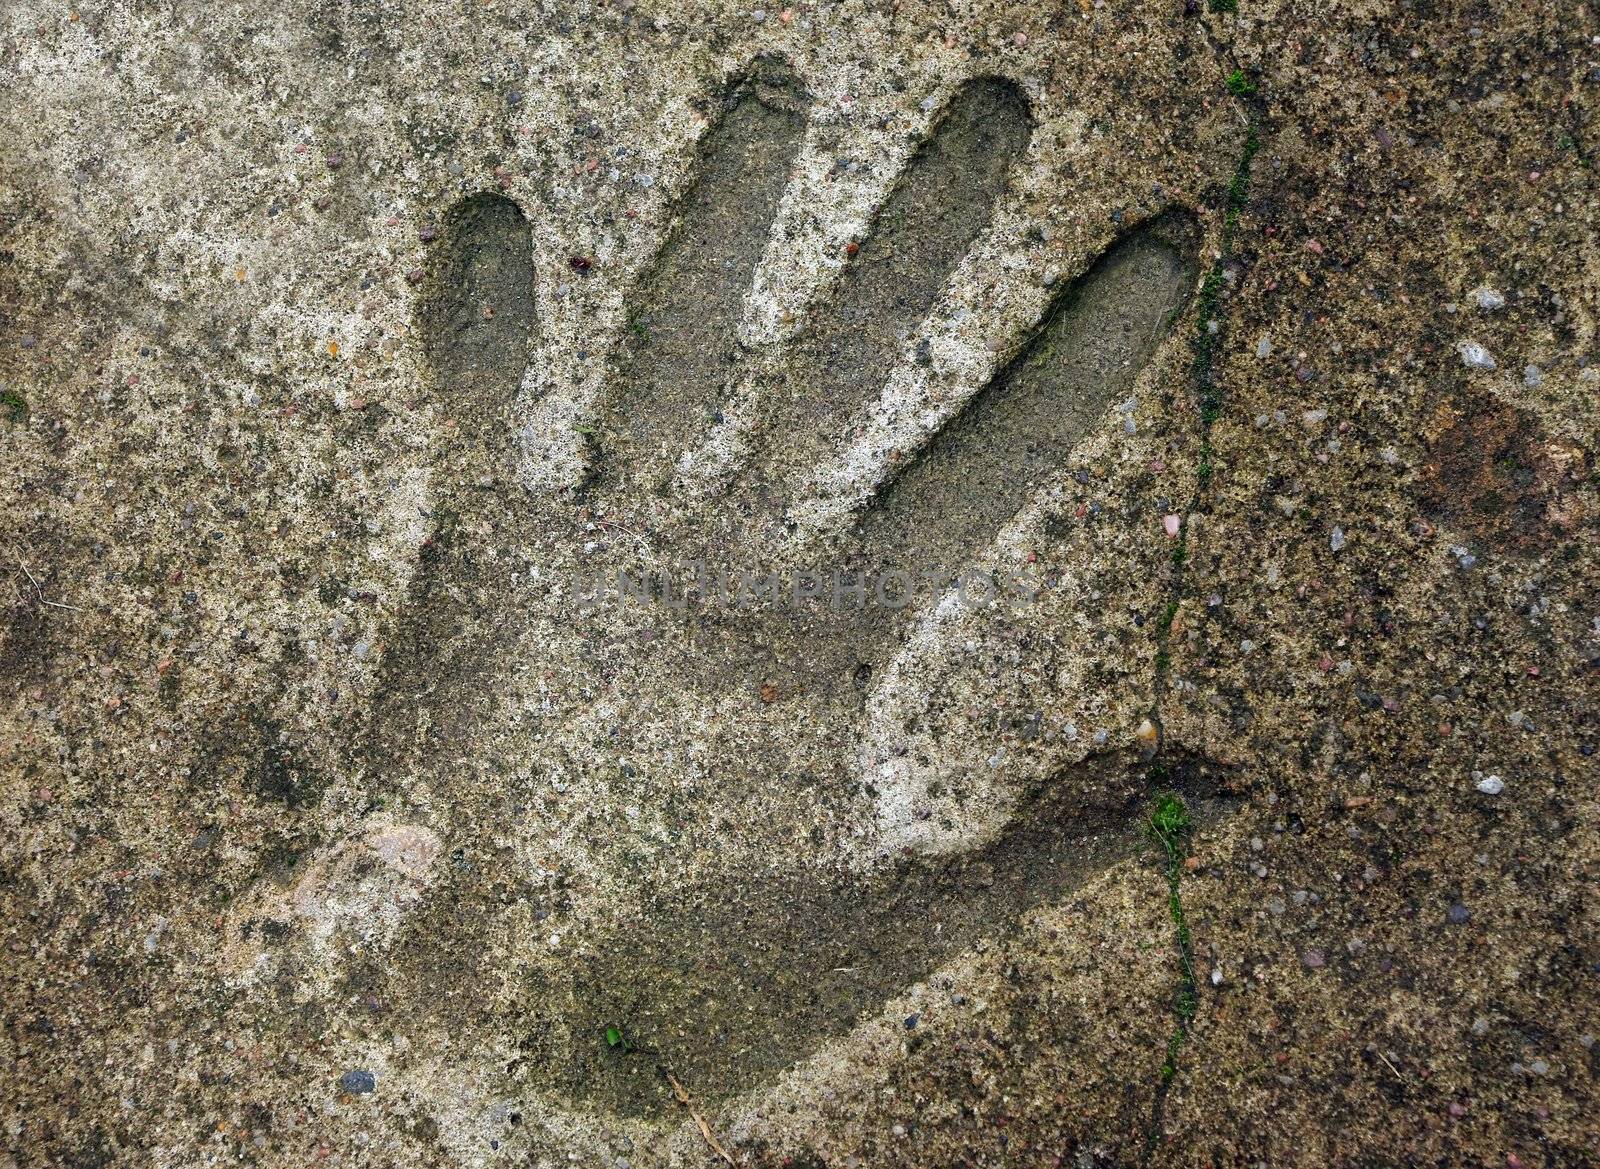 Handprints In Cement by Vitamin